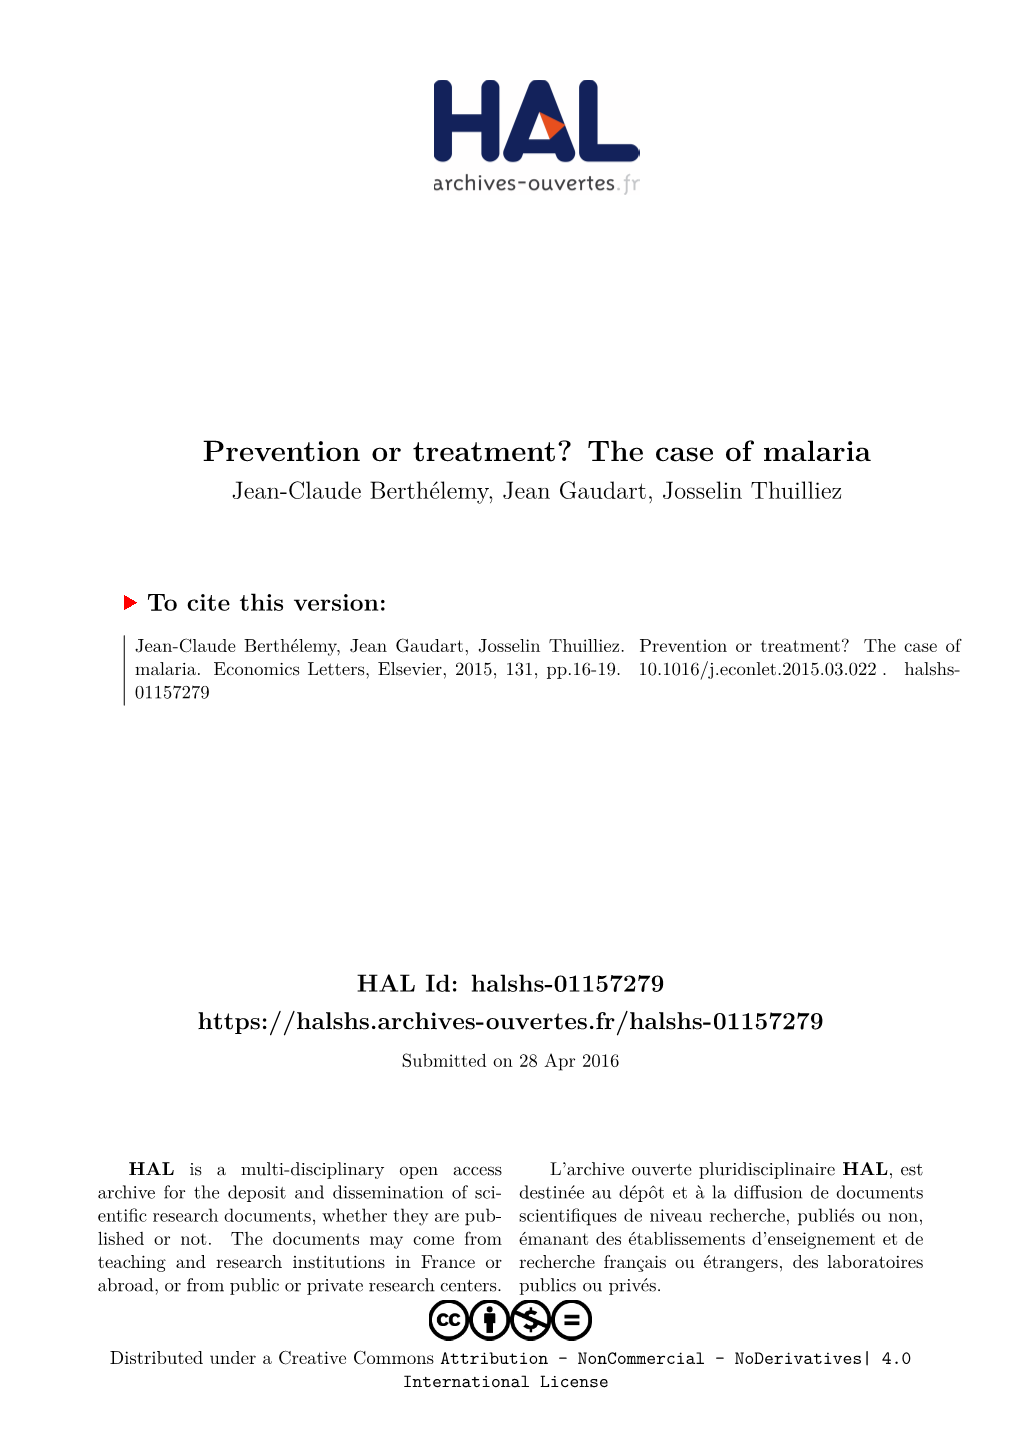 Prevention Or Treatment? the Case of Malaria Jean-Claude Berthélemy, Jean Gaudart, Josselin Thuilliez